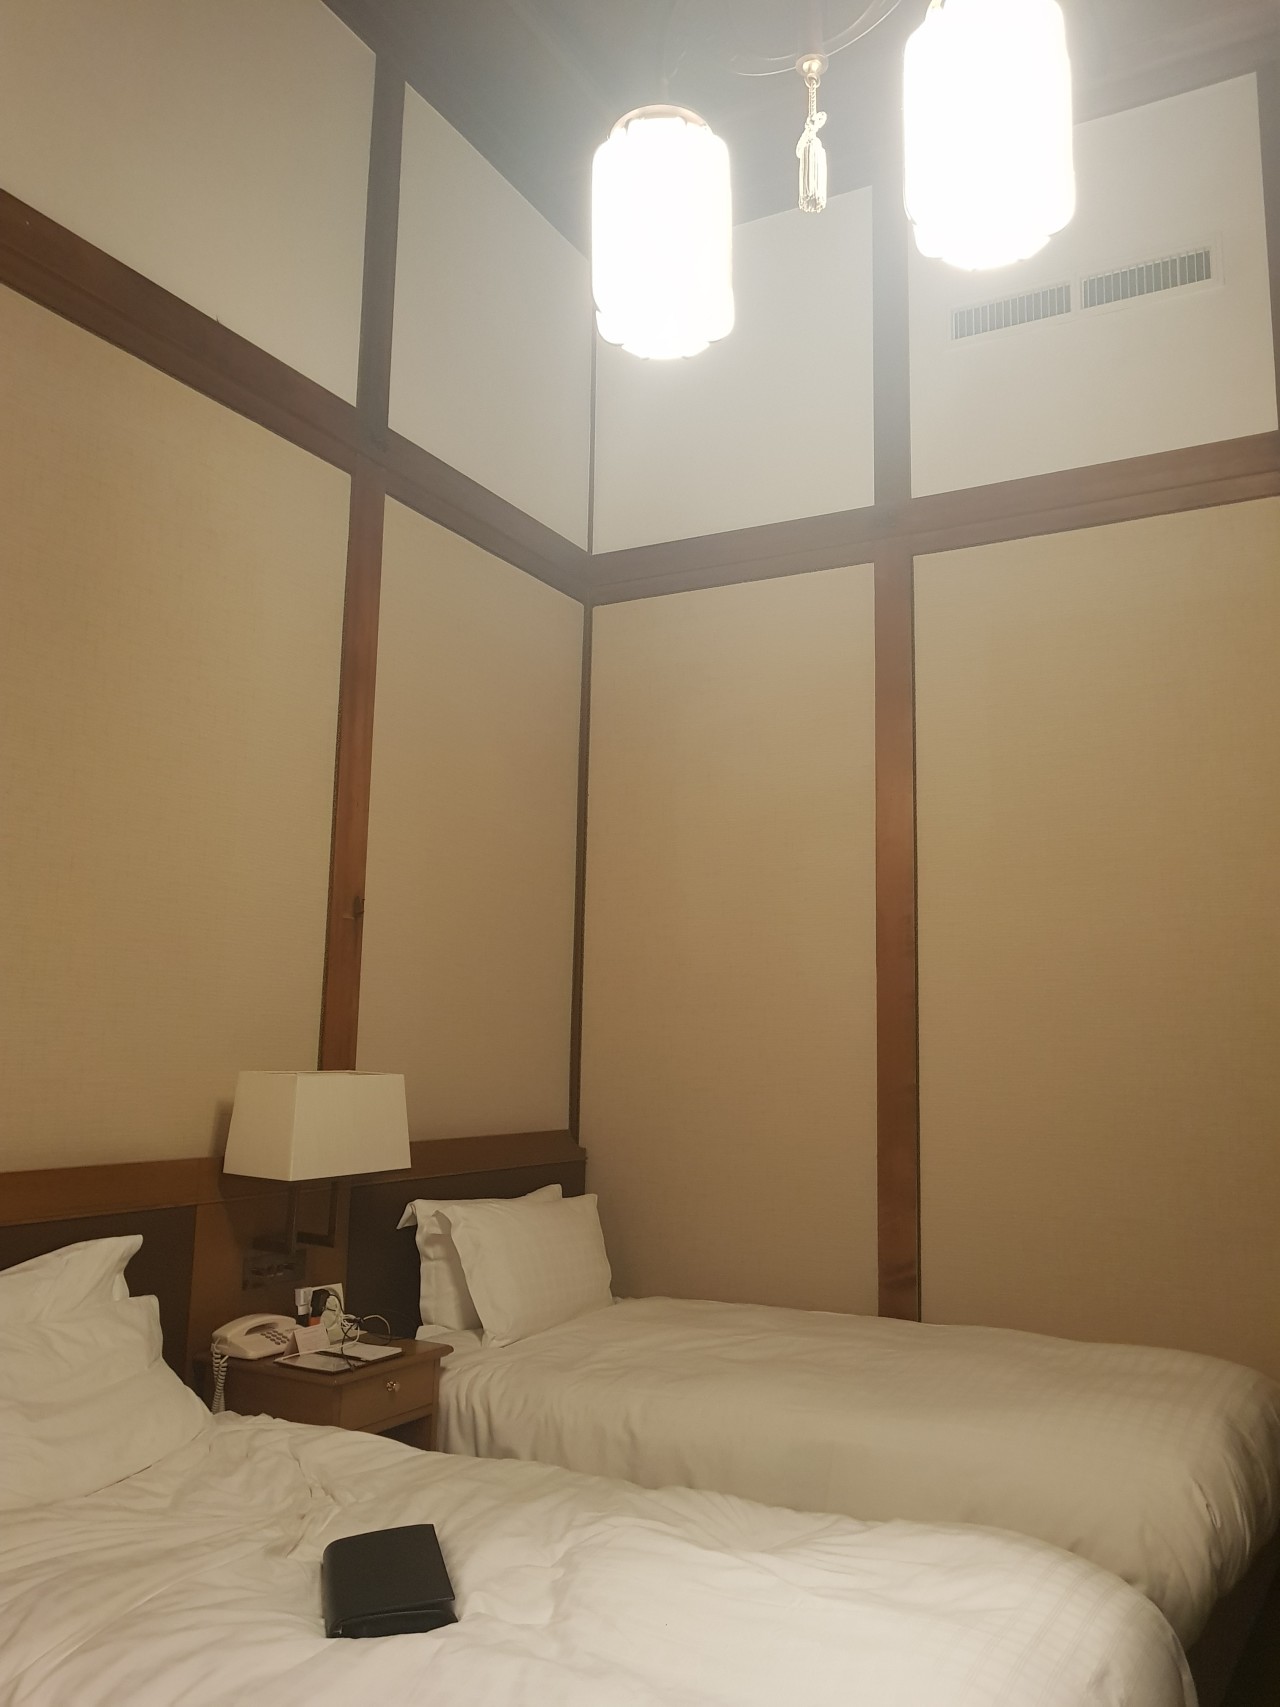 20171003_191716.jpg 일본 호텔,료칸 후기 - 2편 ( 나라 / 오사카 / 교토 / 고베 / 미에 / 와카야마 )